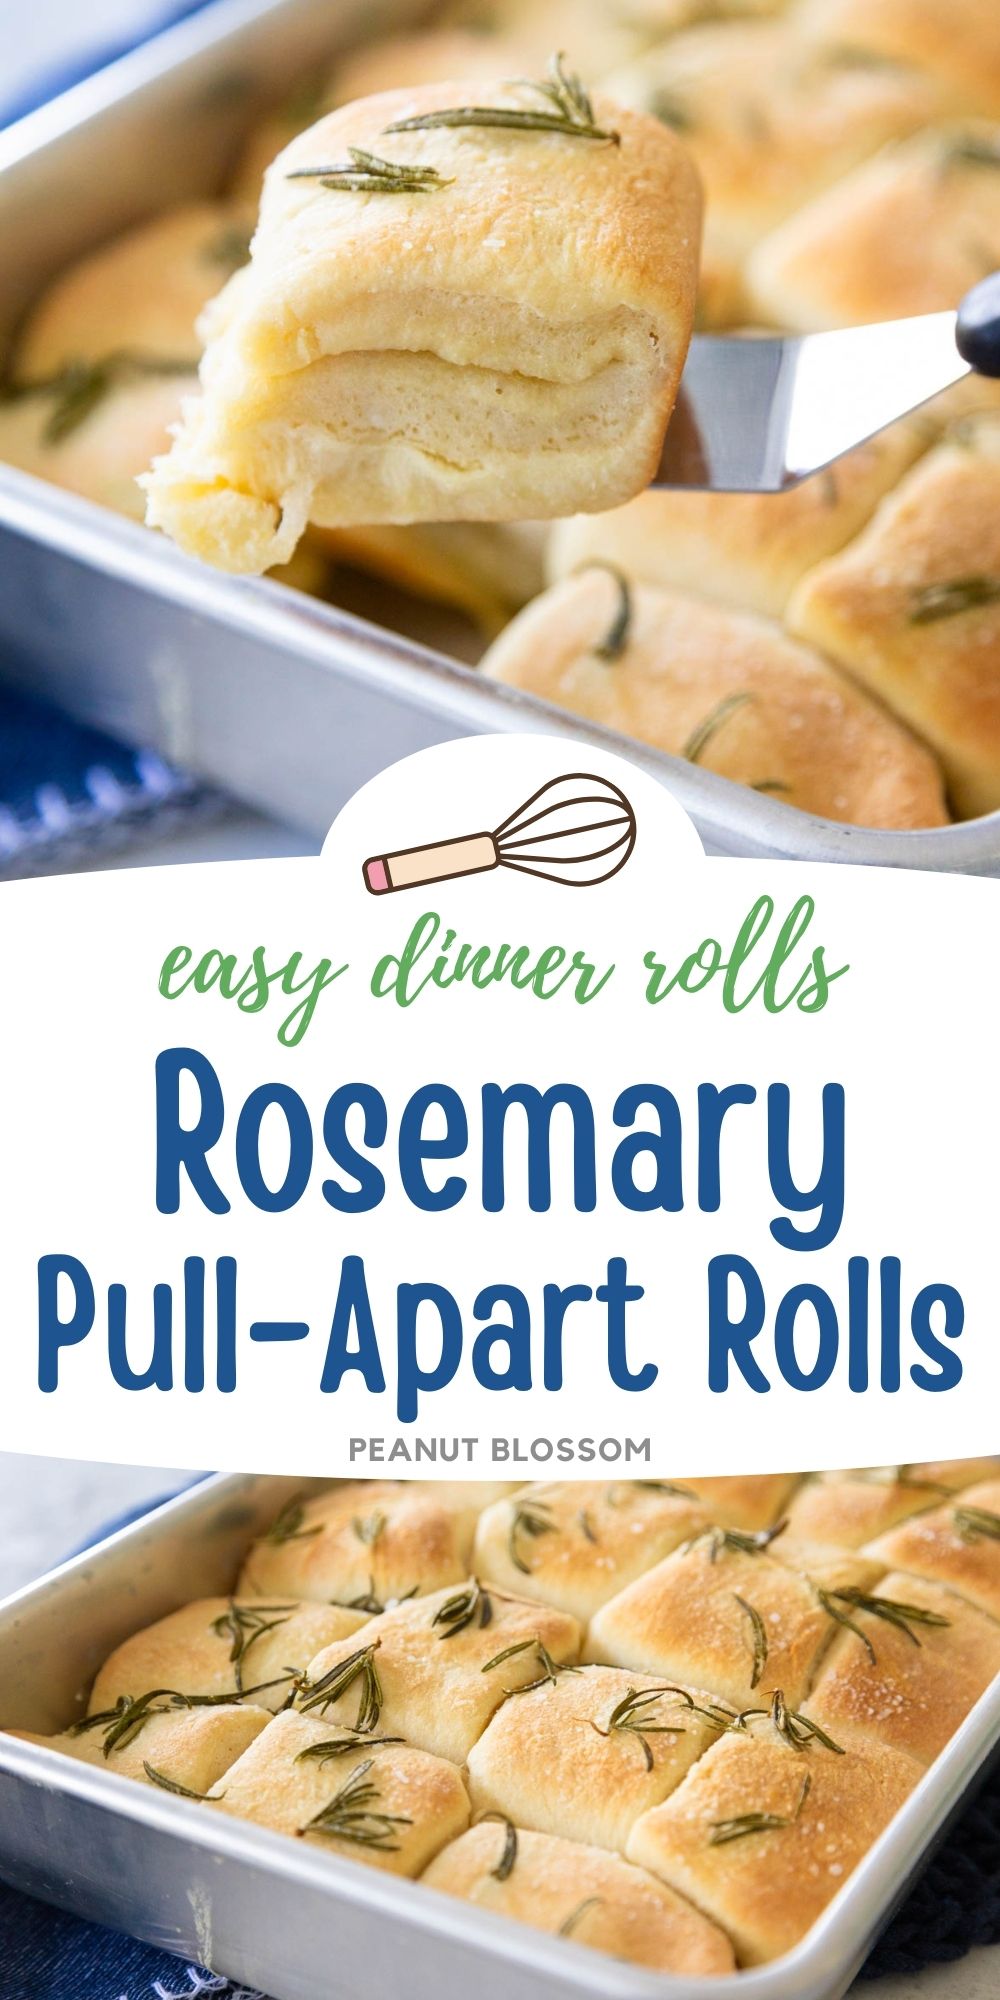 Buttered Rosemary Rolls